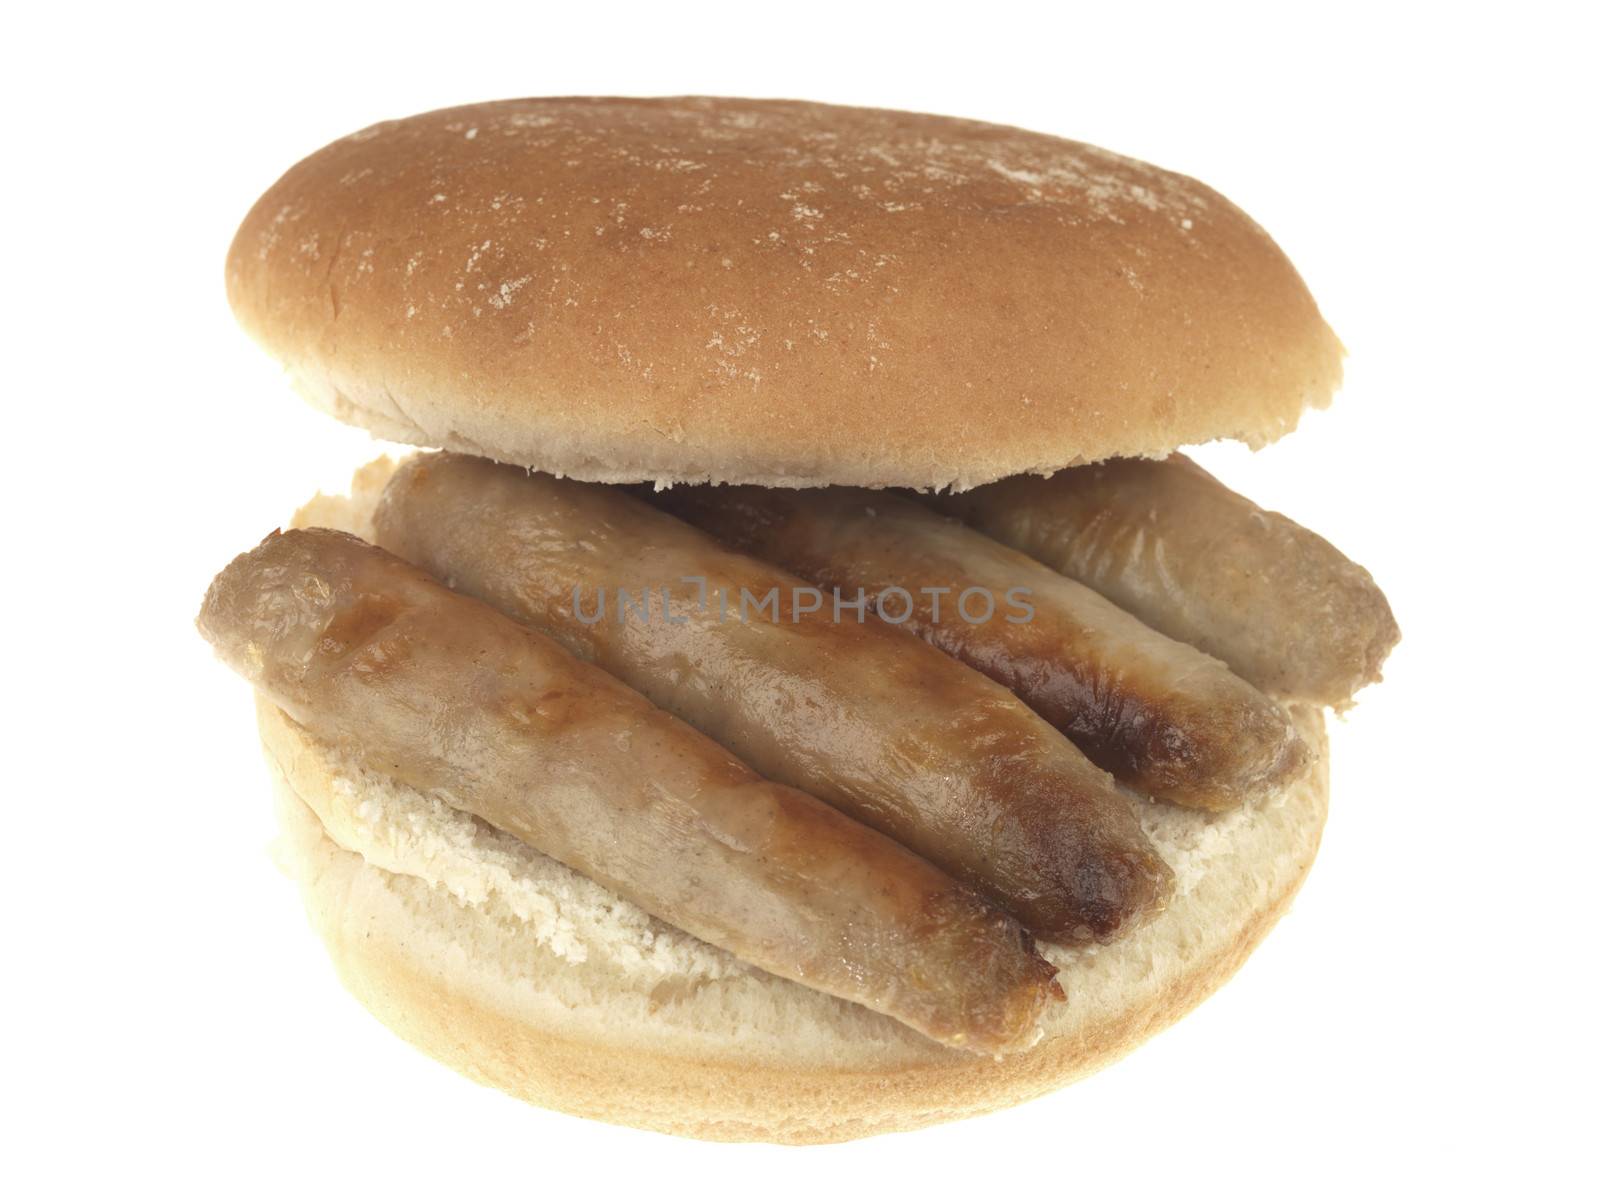 Sausage Breakfast Roll by Whiteboxmedia